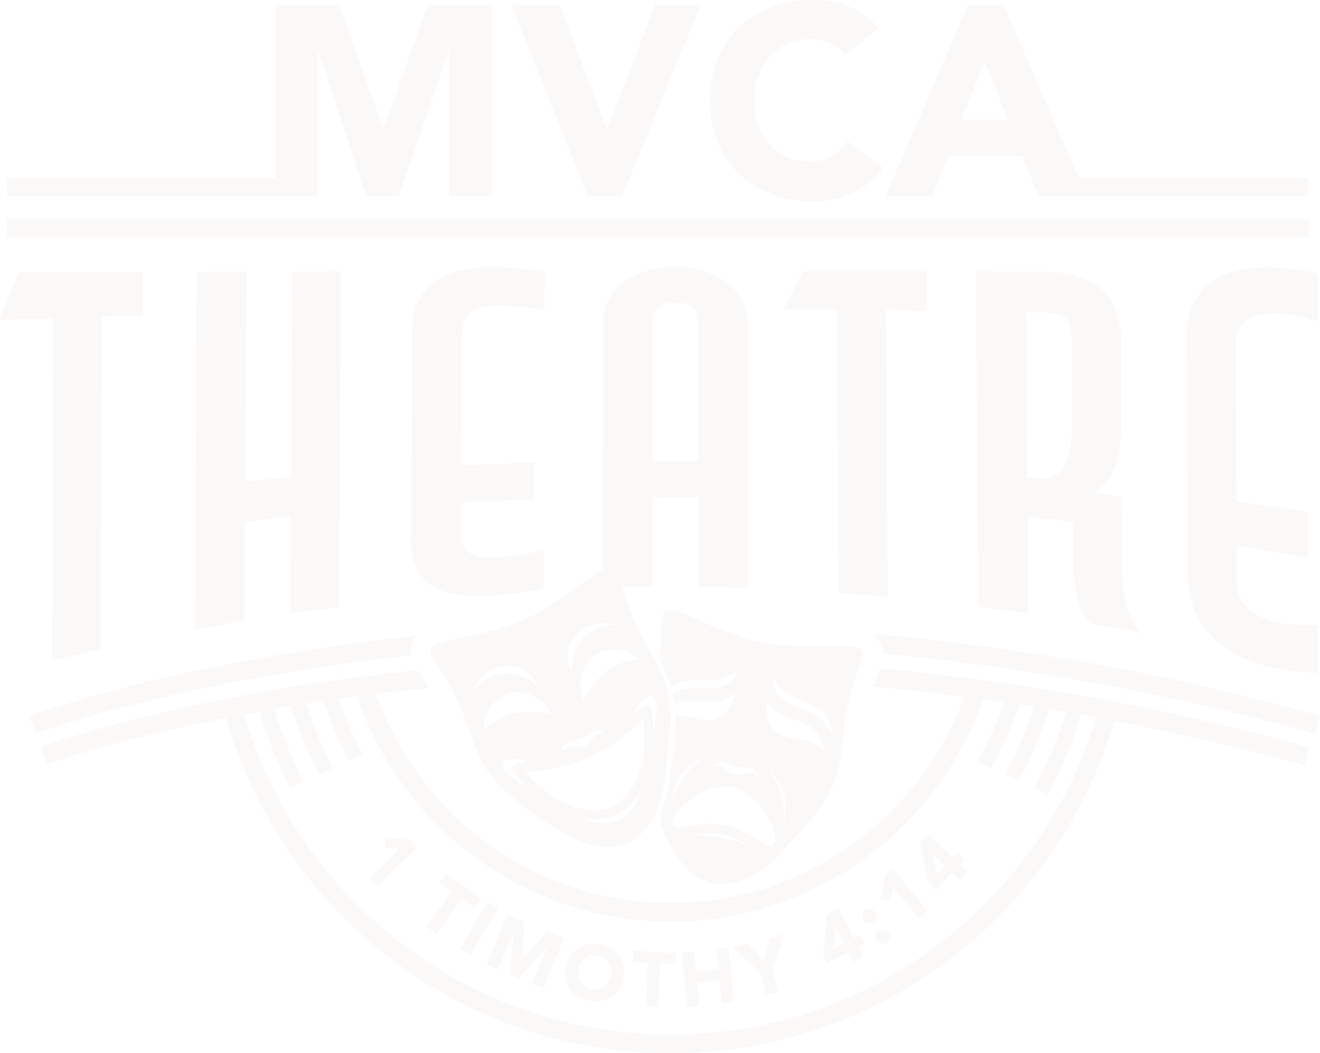 Miami Valley Christian Academy Theatre